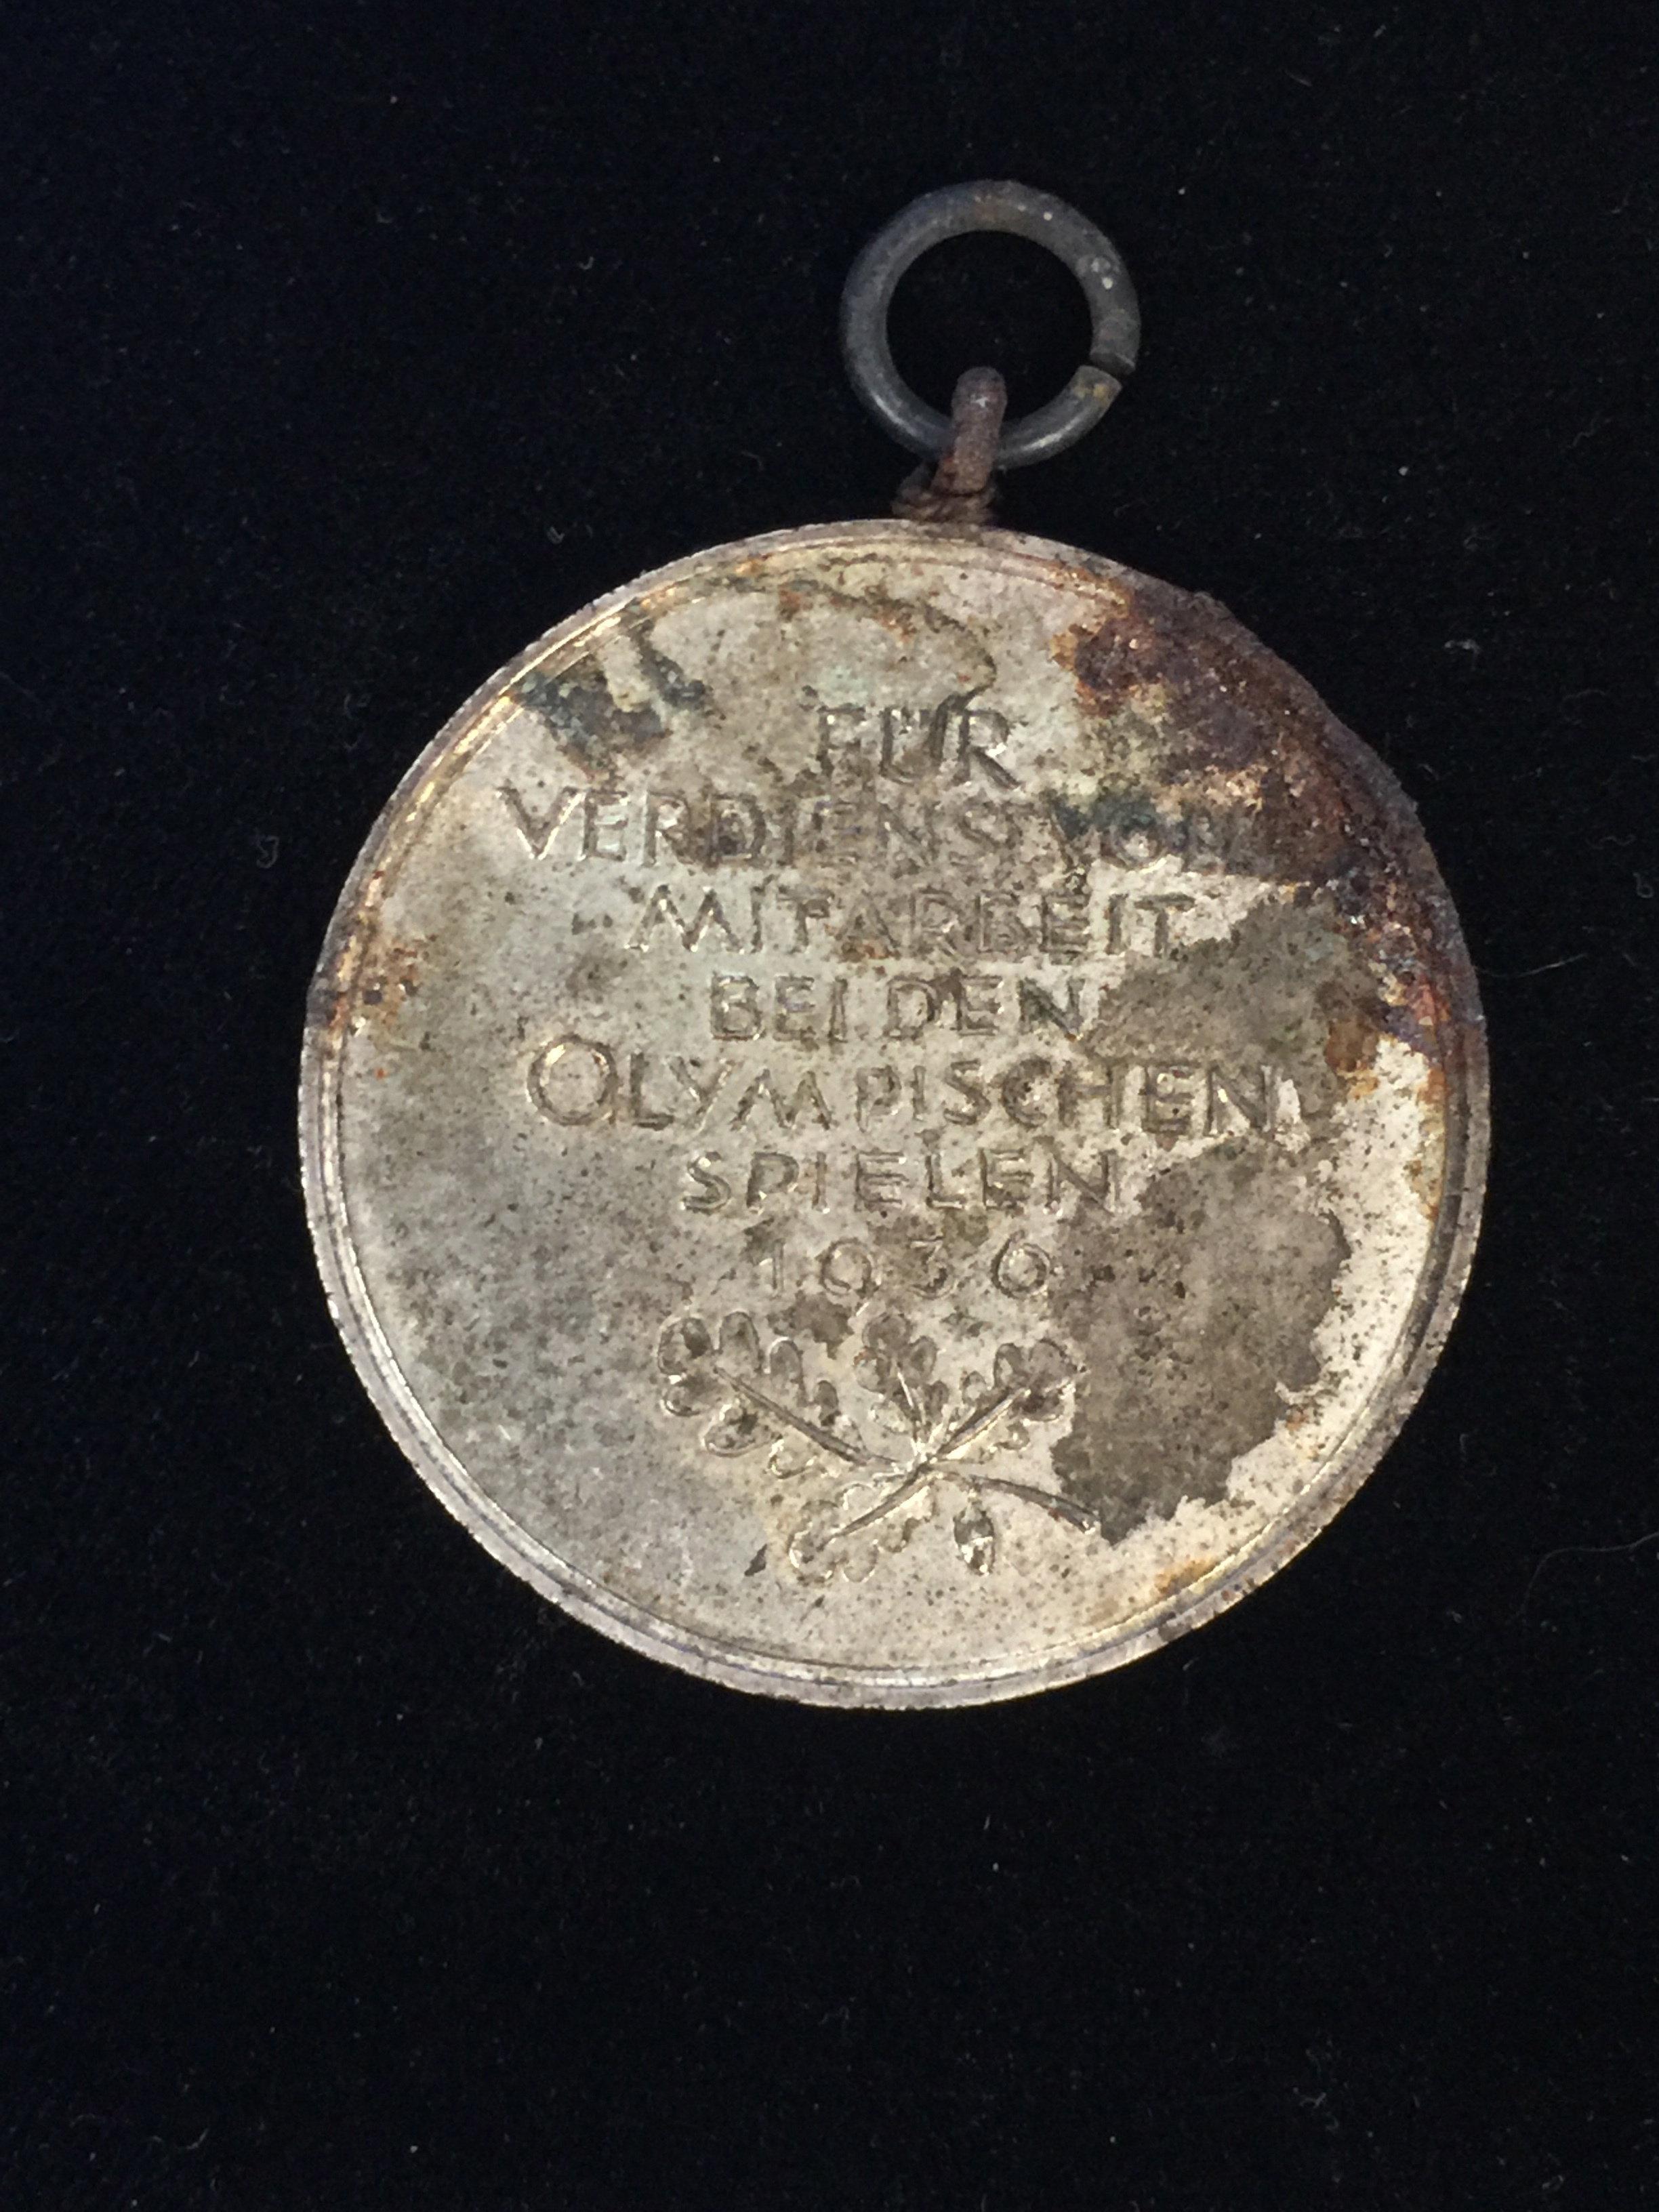 1936 Olympics Souvenir Medal with German Nazi Eagle & Swastika - Original